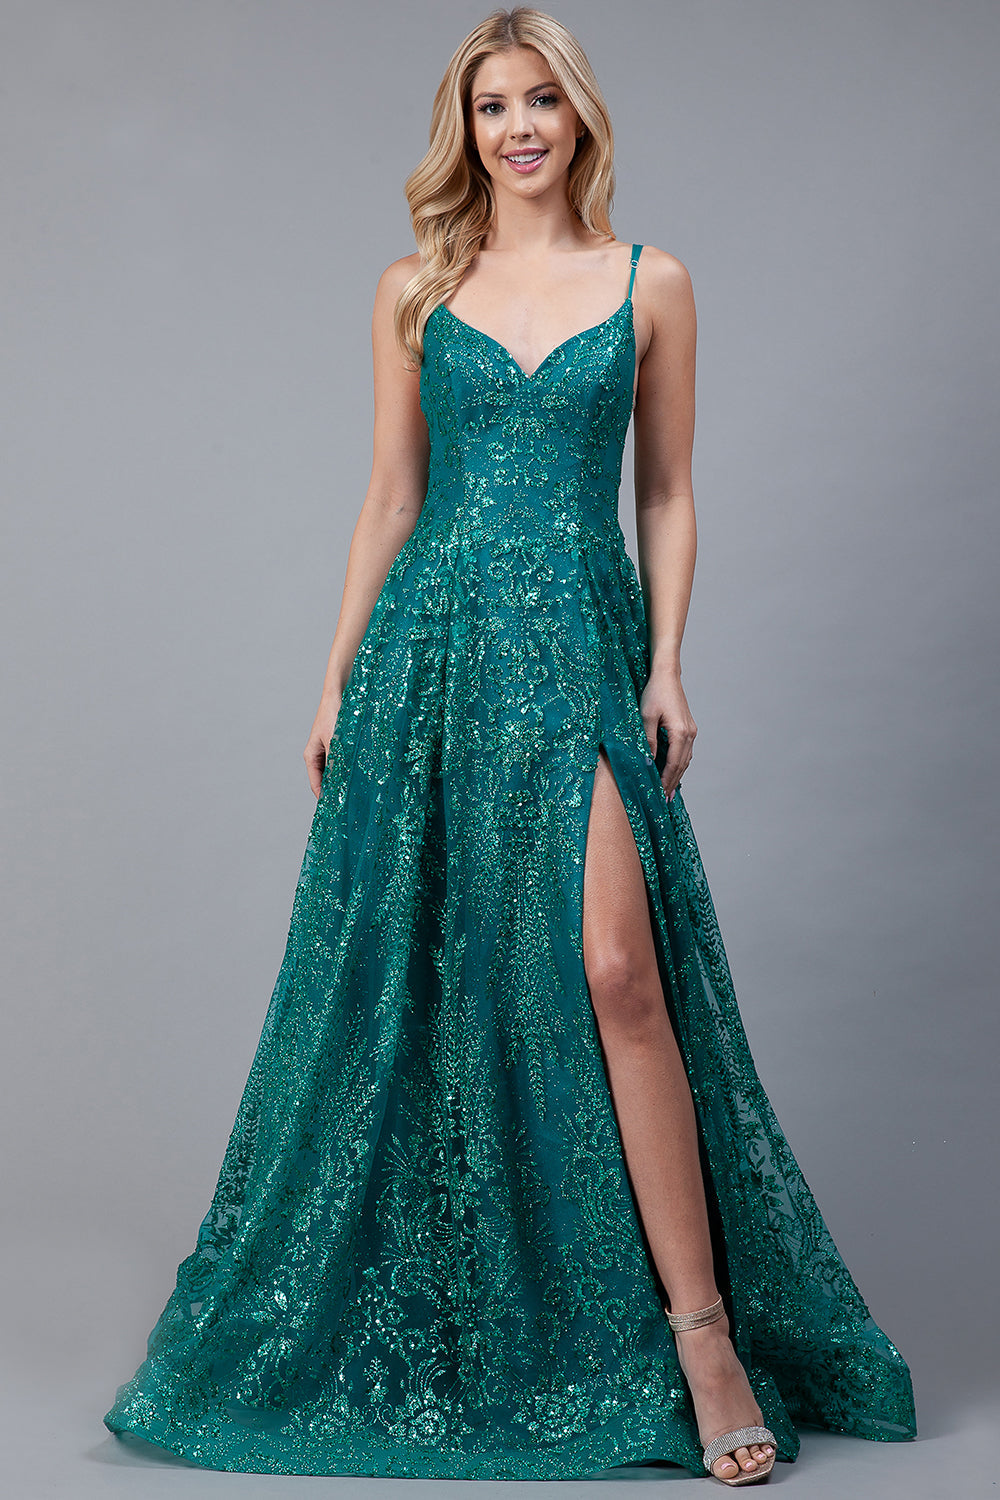 Glitter Embroidererd Lace Side Slit Open V-Back Long Prom Dress ACEL010-4